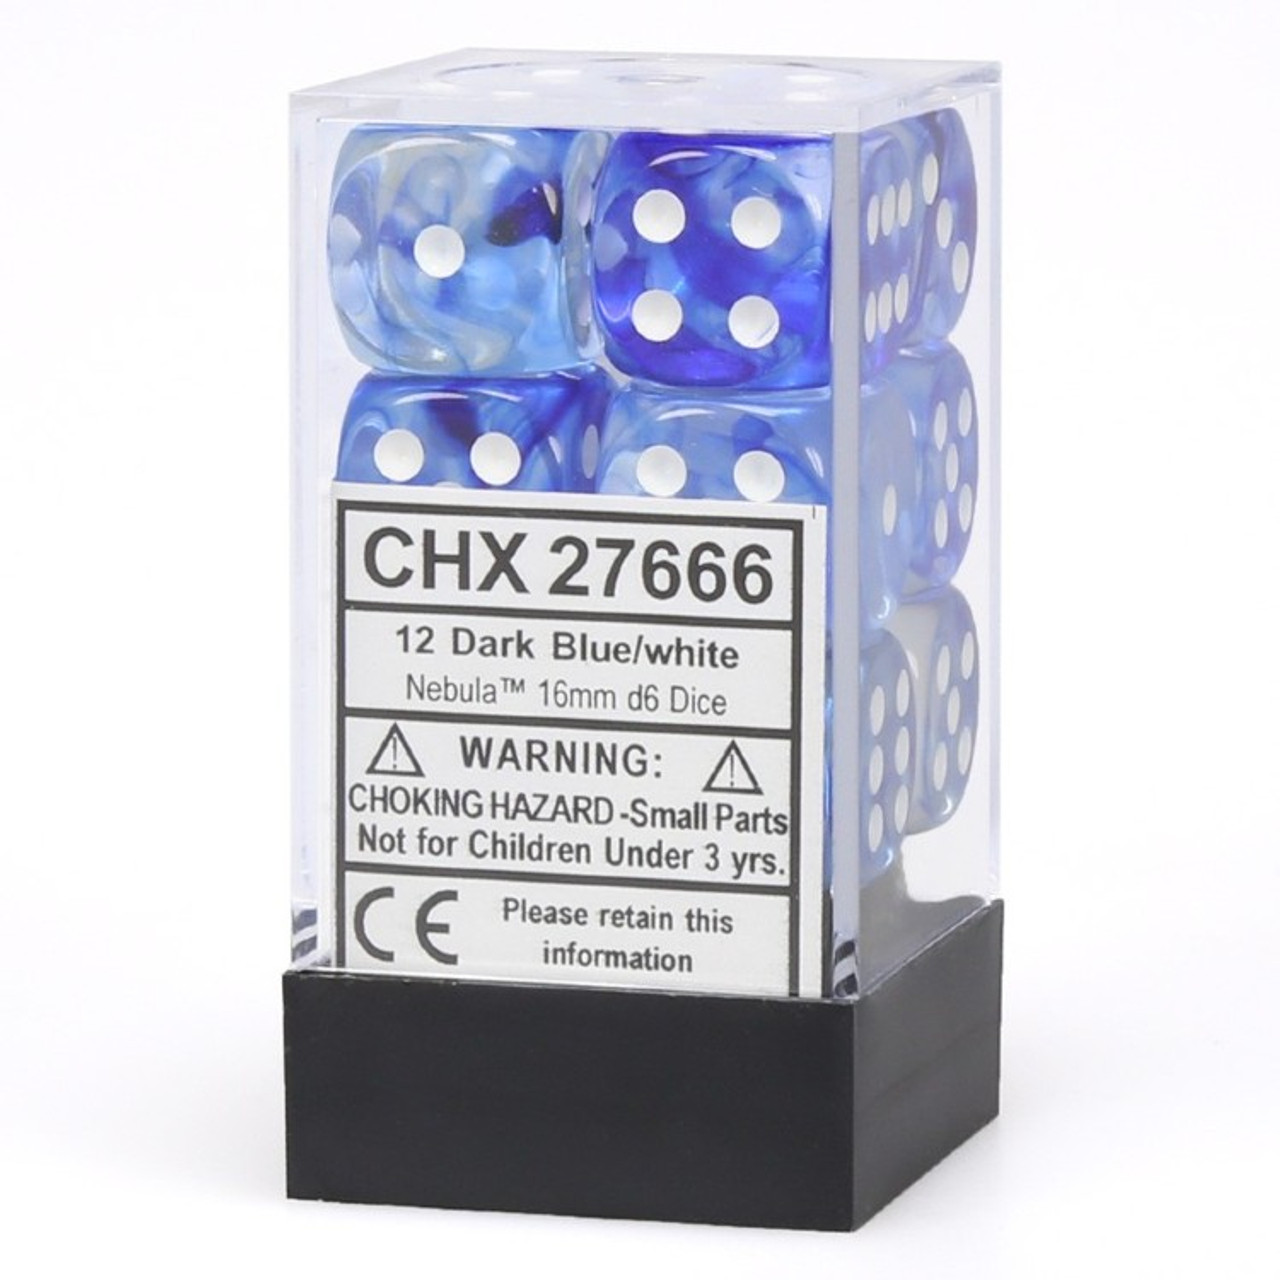 12 Dice Chessex Nebula Wisteria/white 16mm d6 Dice Block 